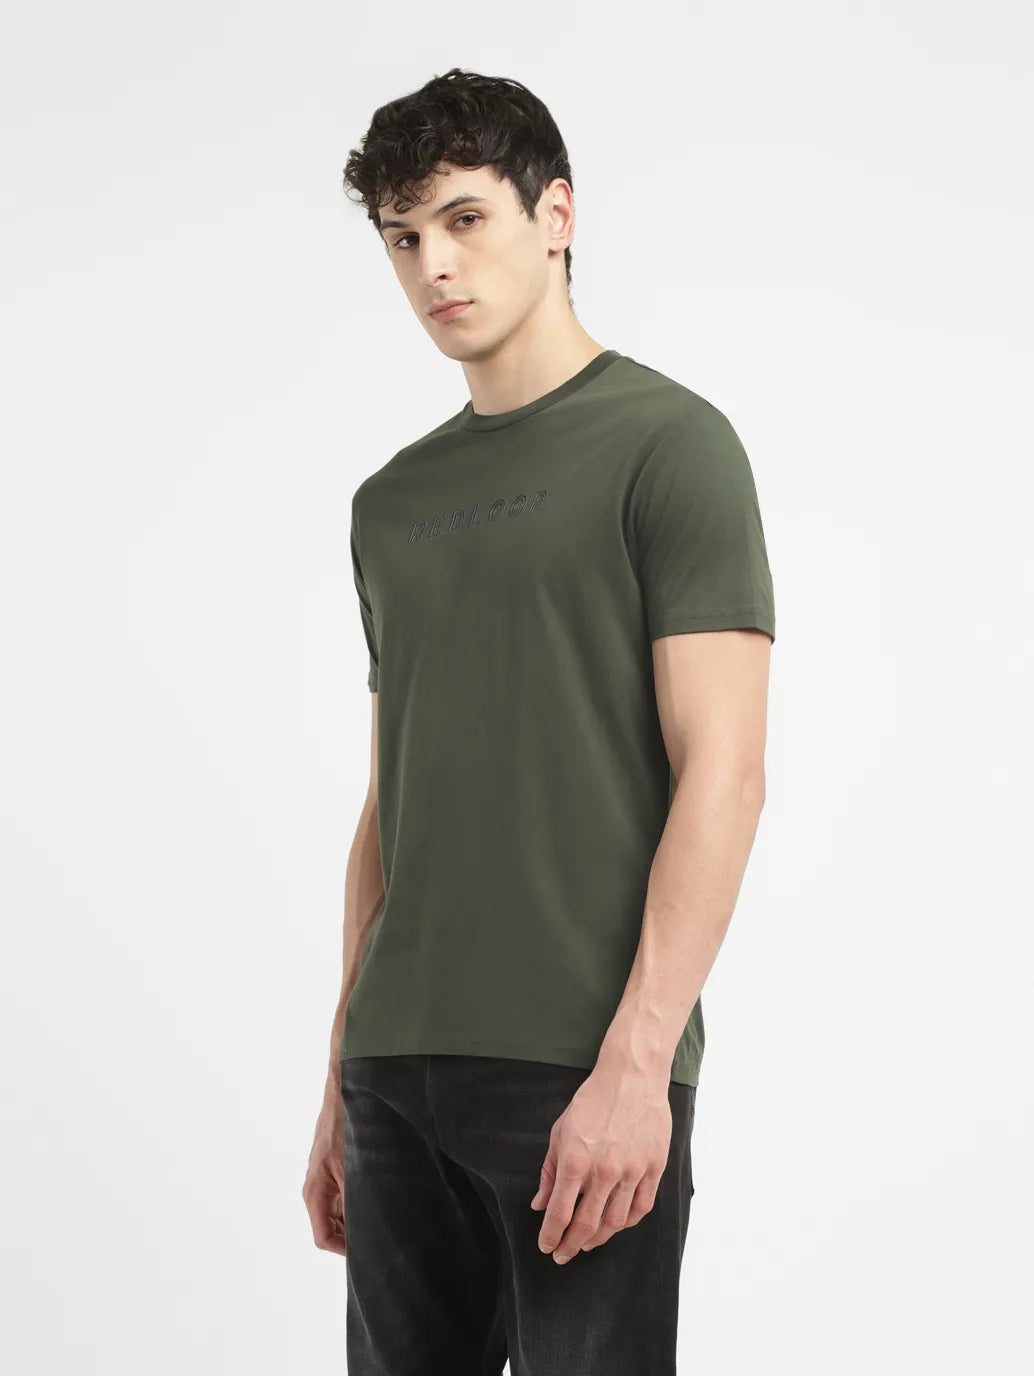 Men's Typographic Print Slim Fit T-shirt